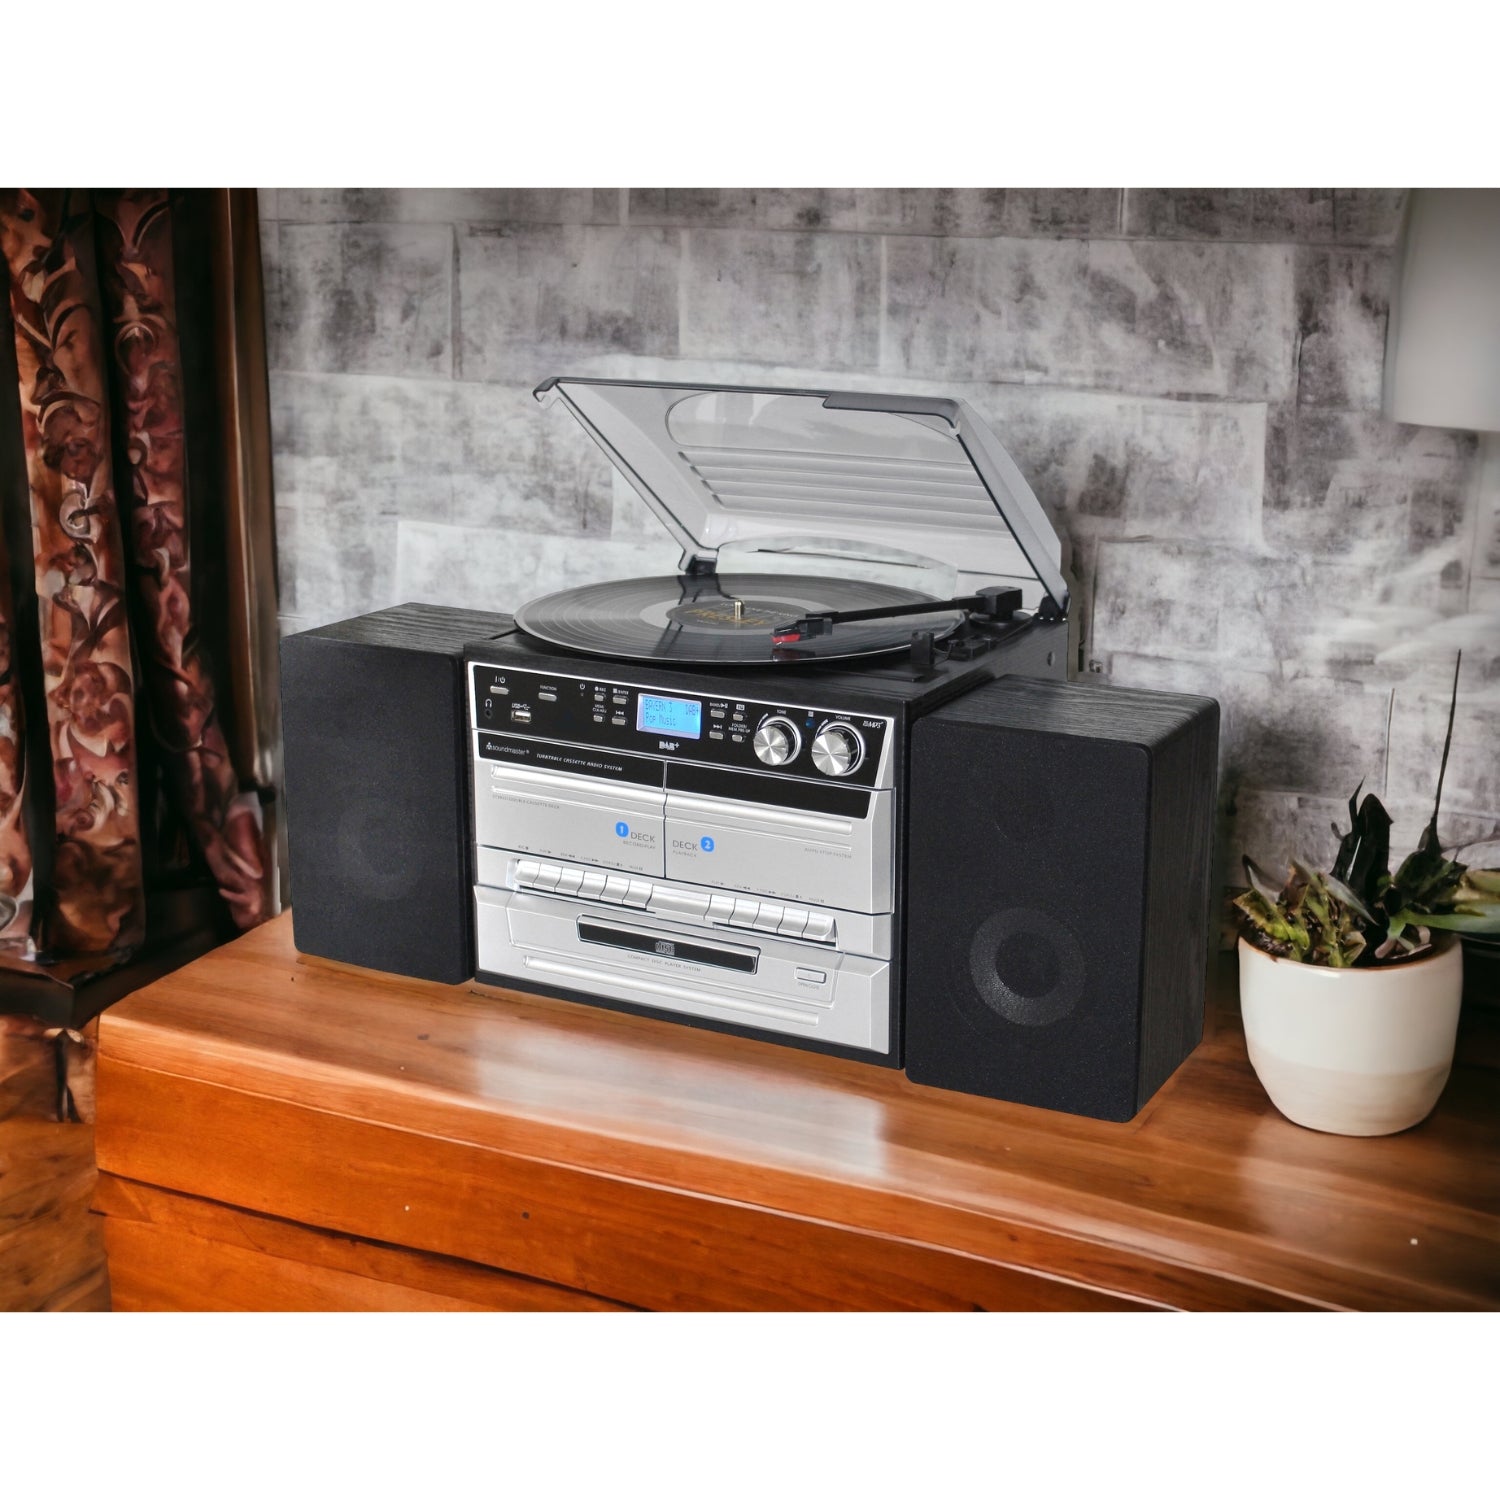 B-WARE Soundmaster MCD5550SW Stereoanlage DAB+ Doppelkassette Bluetooth CD MP3 Plattenspieler USB Encoding Digitalisierung